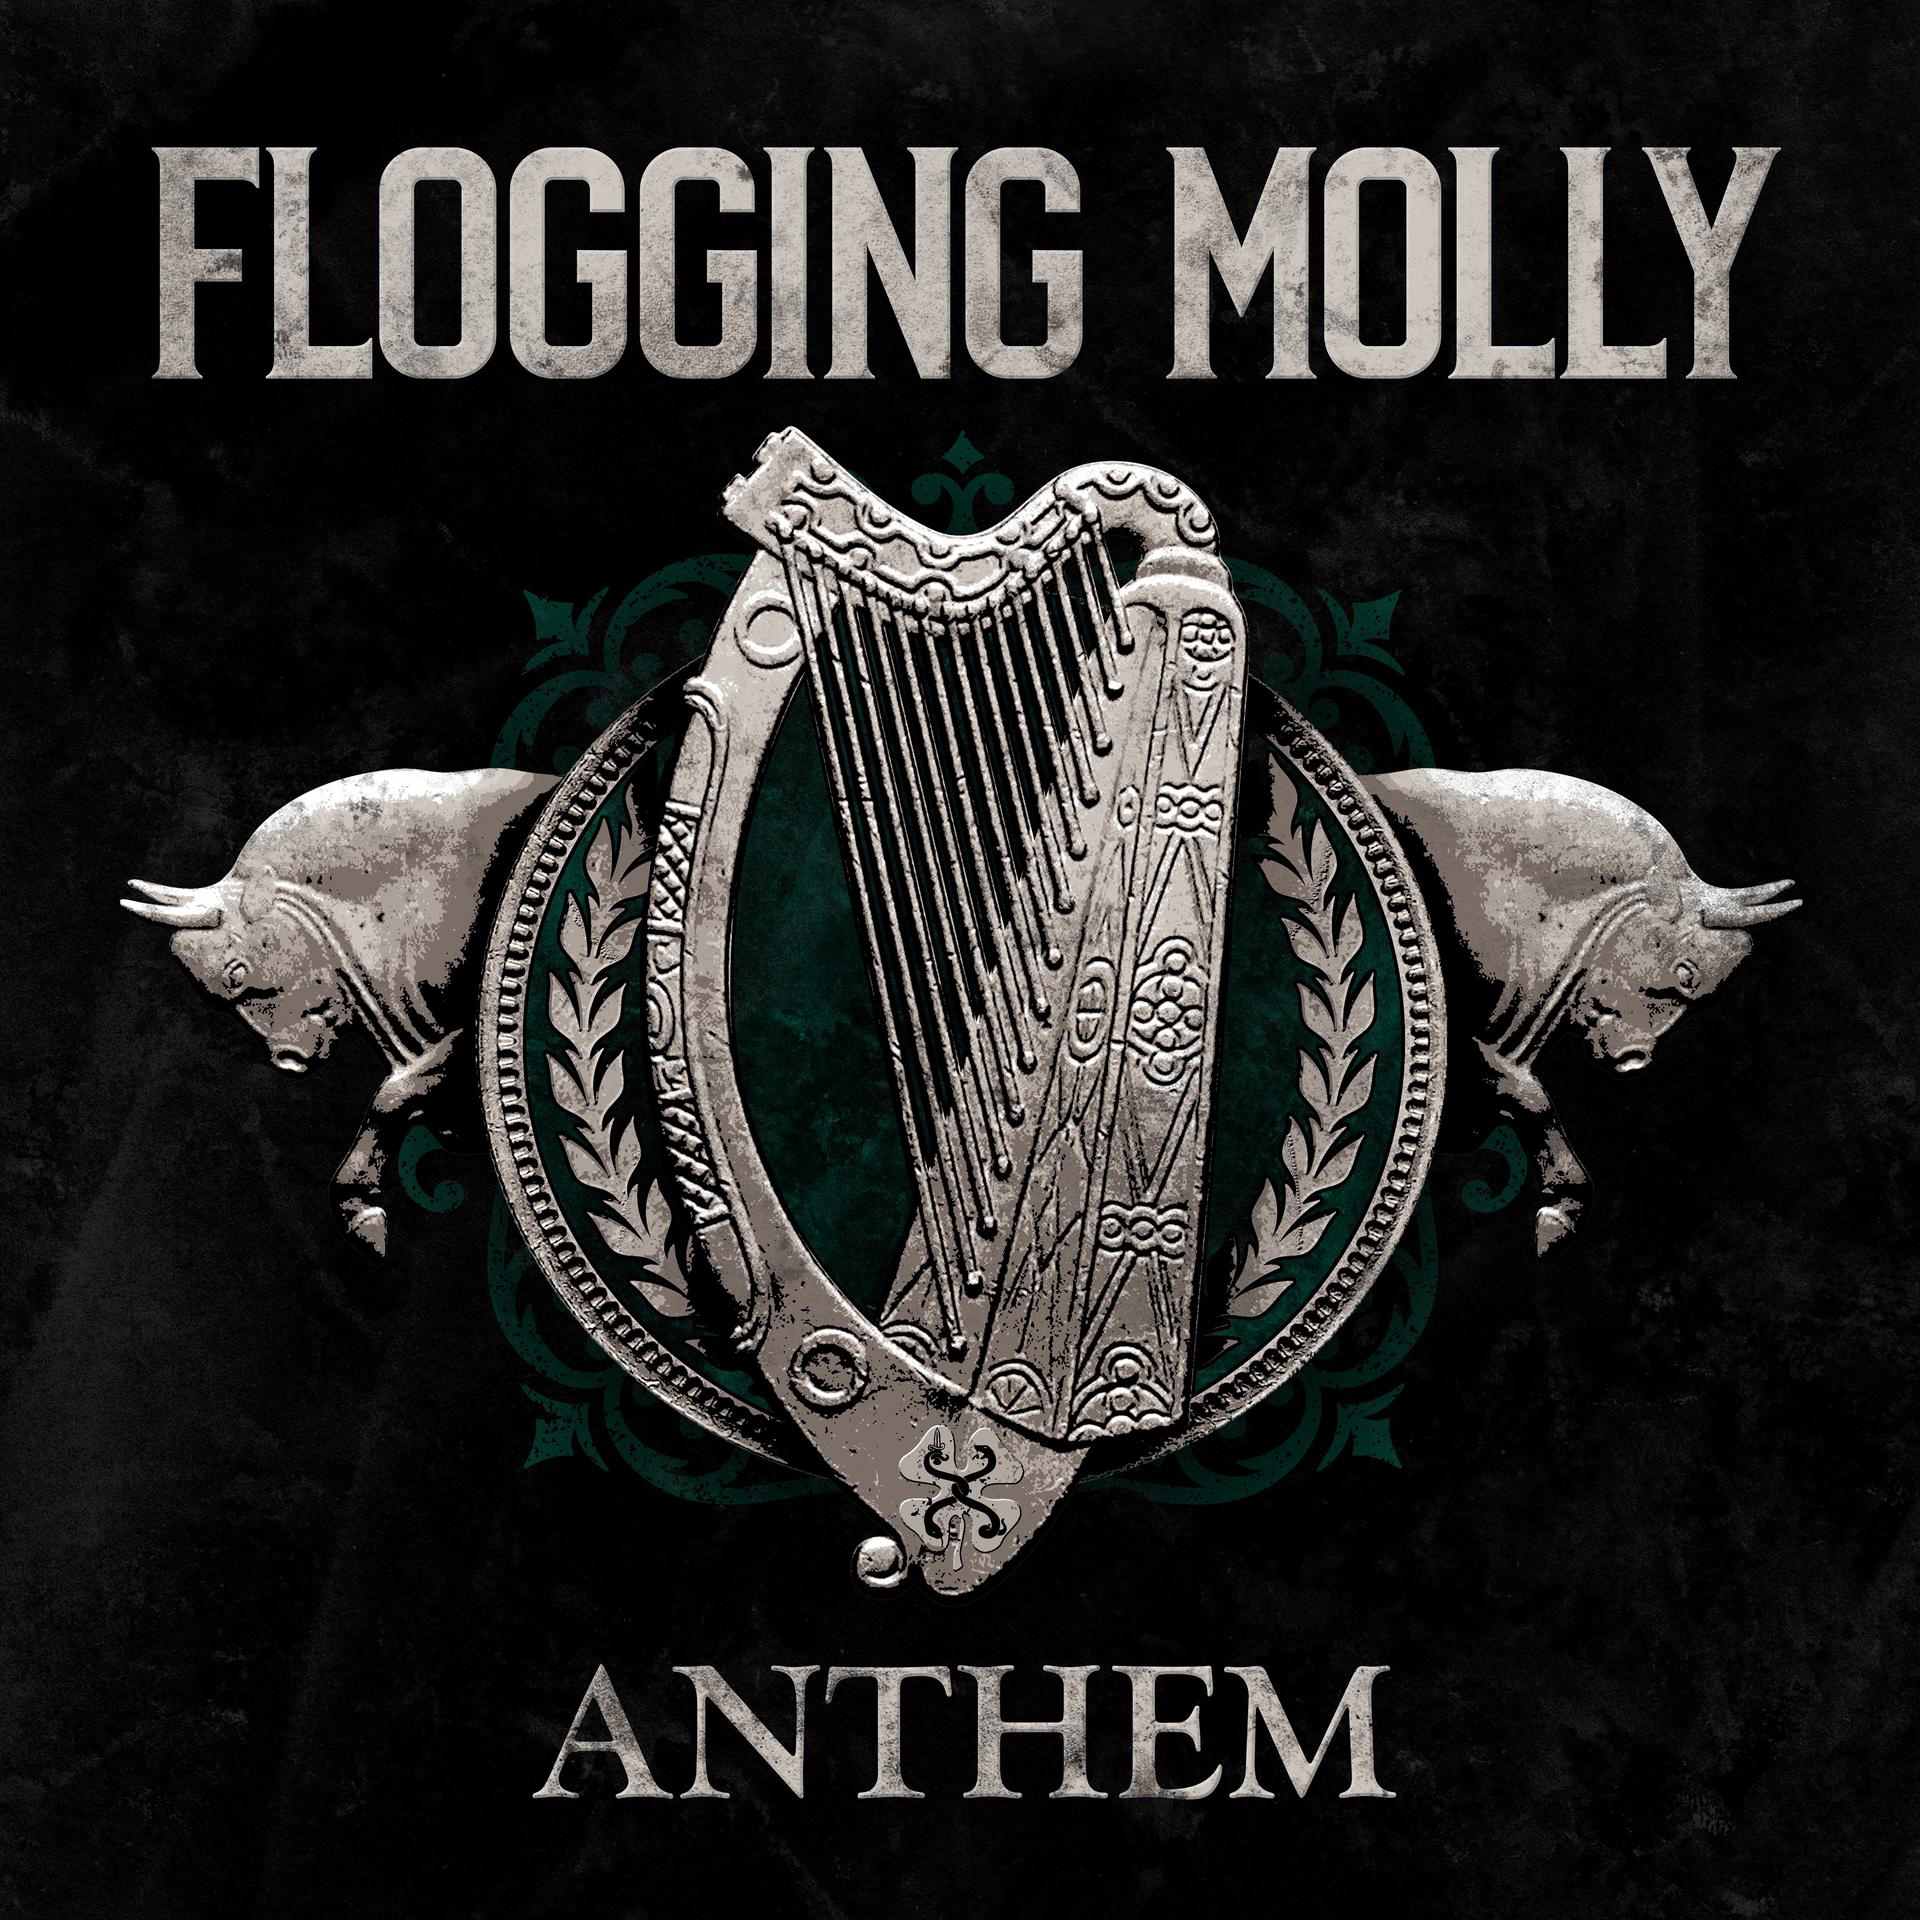 Flogging Molly - Anthem - (CD)